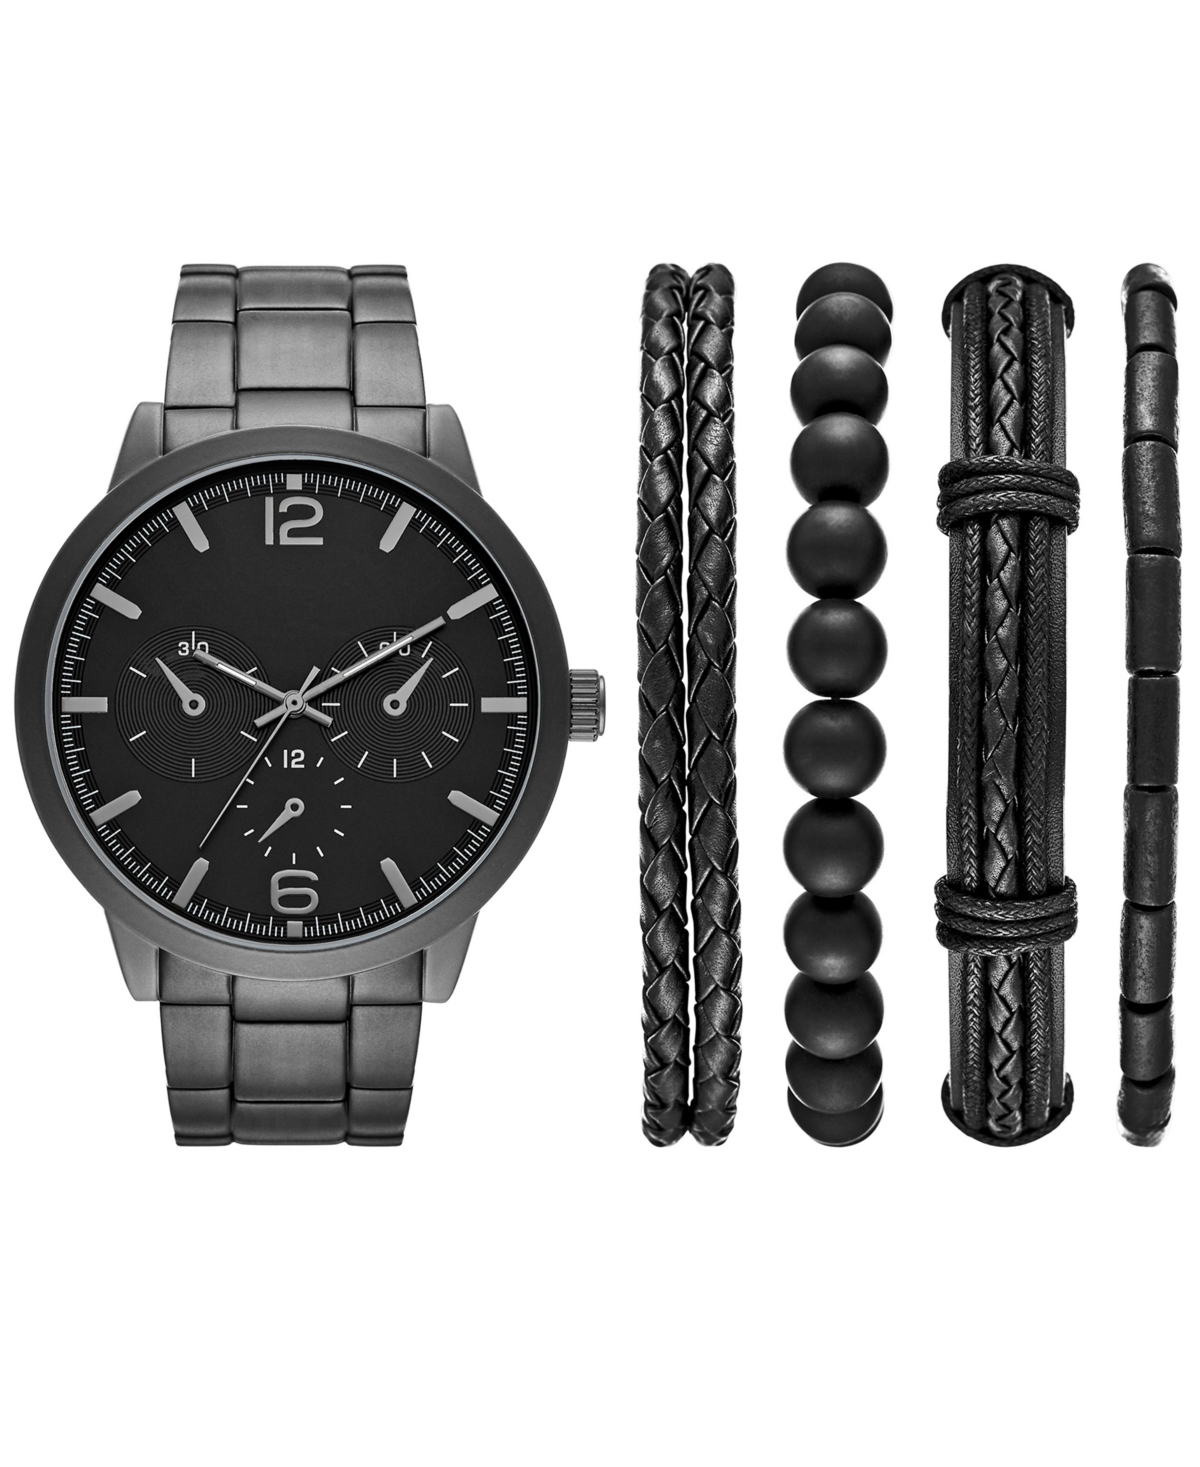 Men's Black Stainless Steel Bracelet Watch 46mm Gift Set - Black